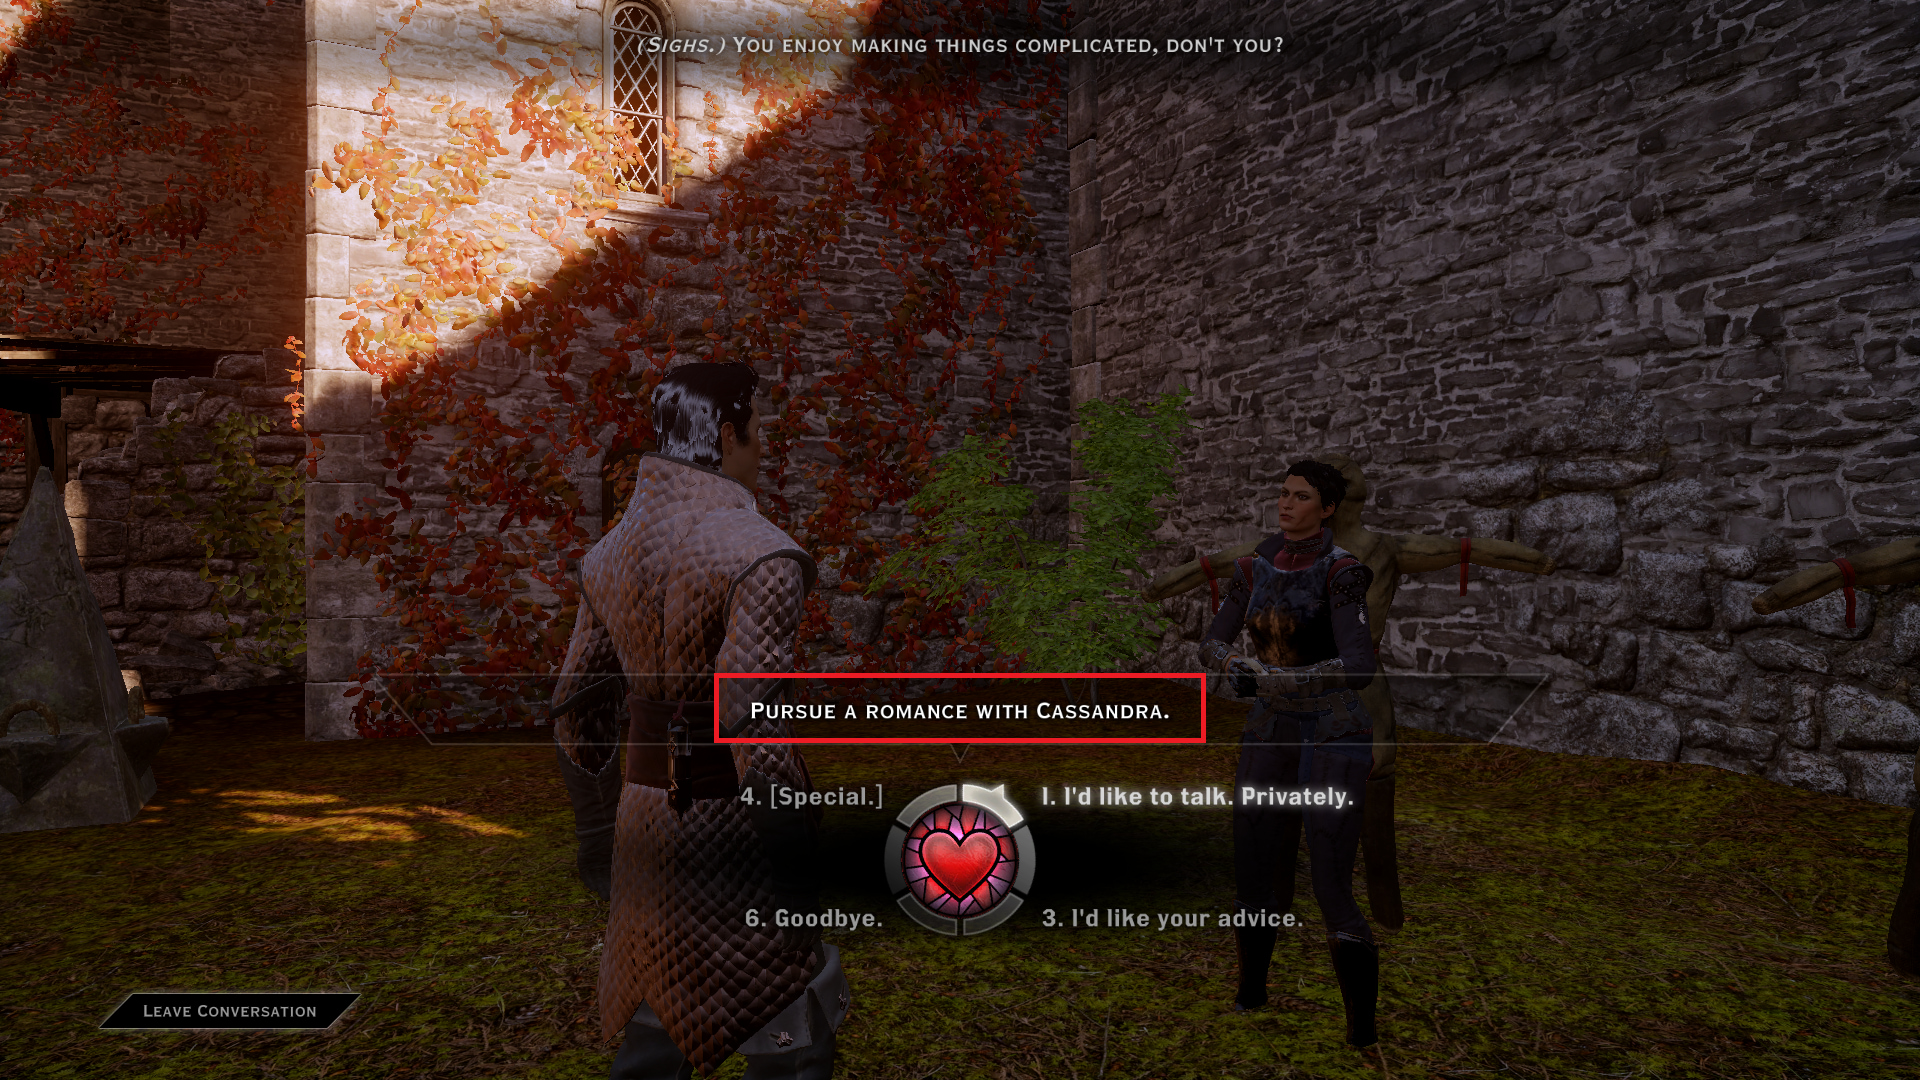 Mercenary achievement in Dragon Age: Origins